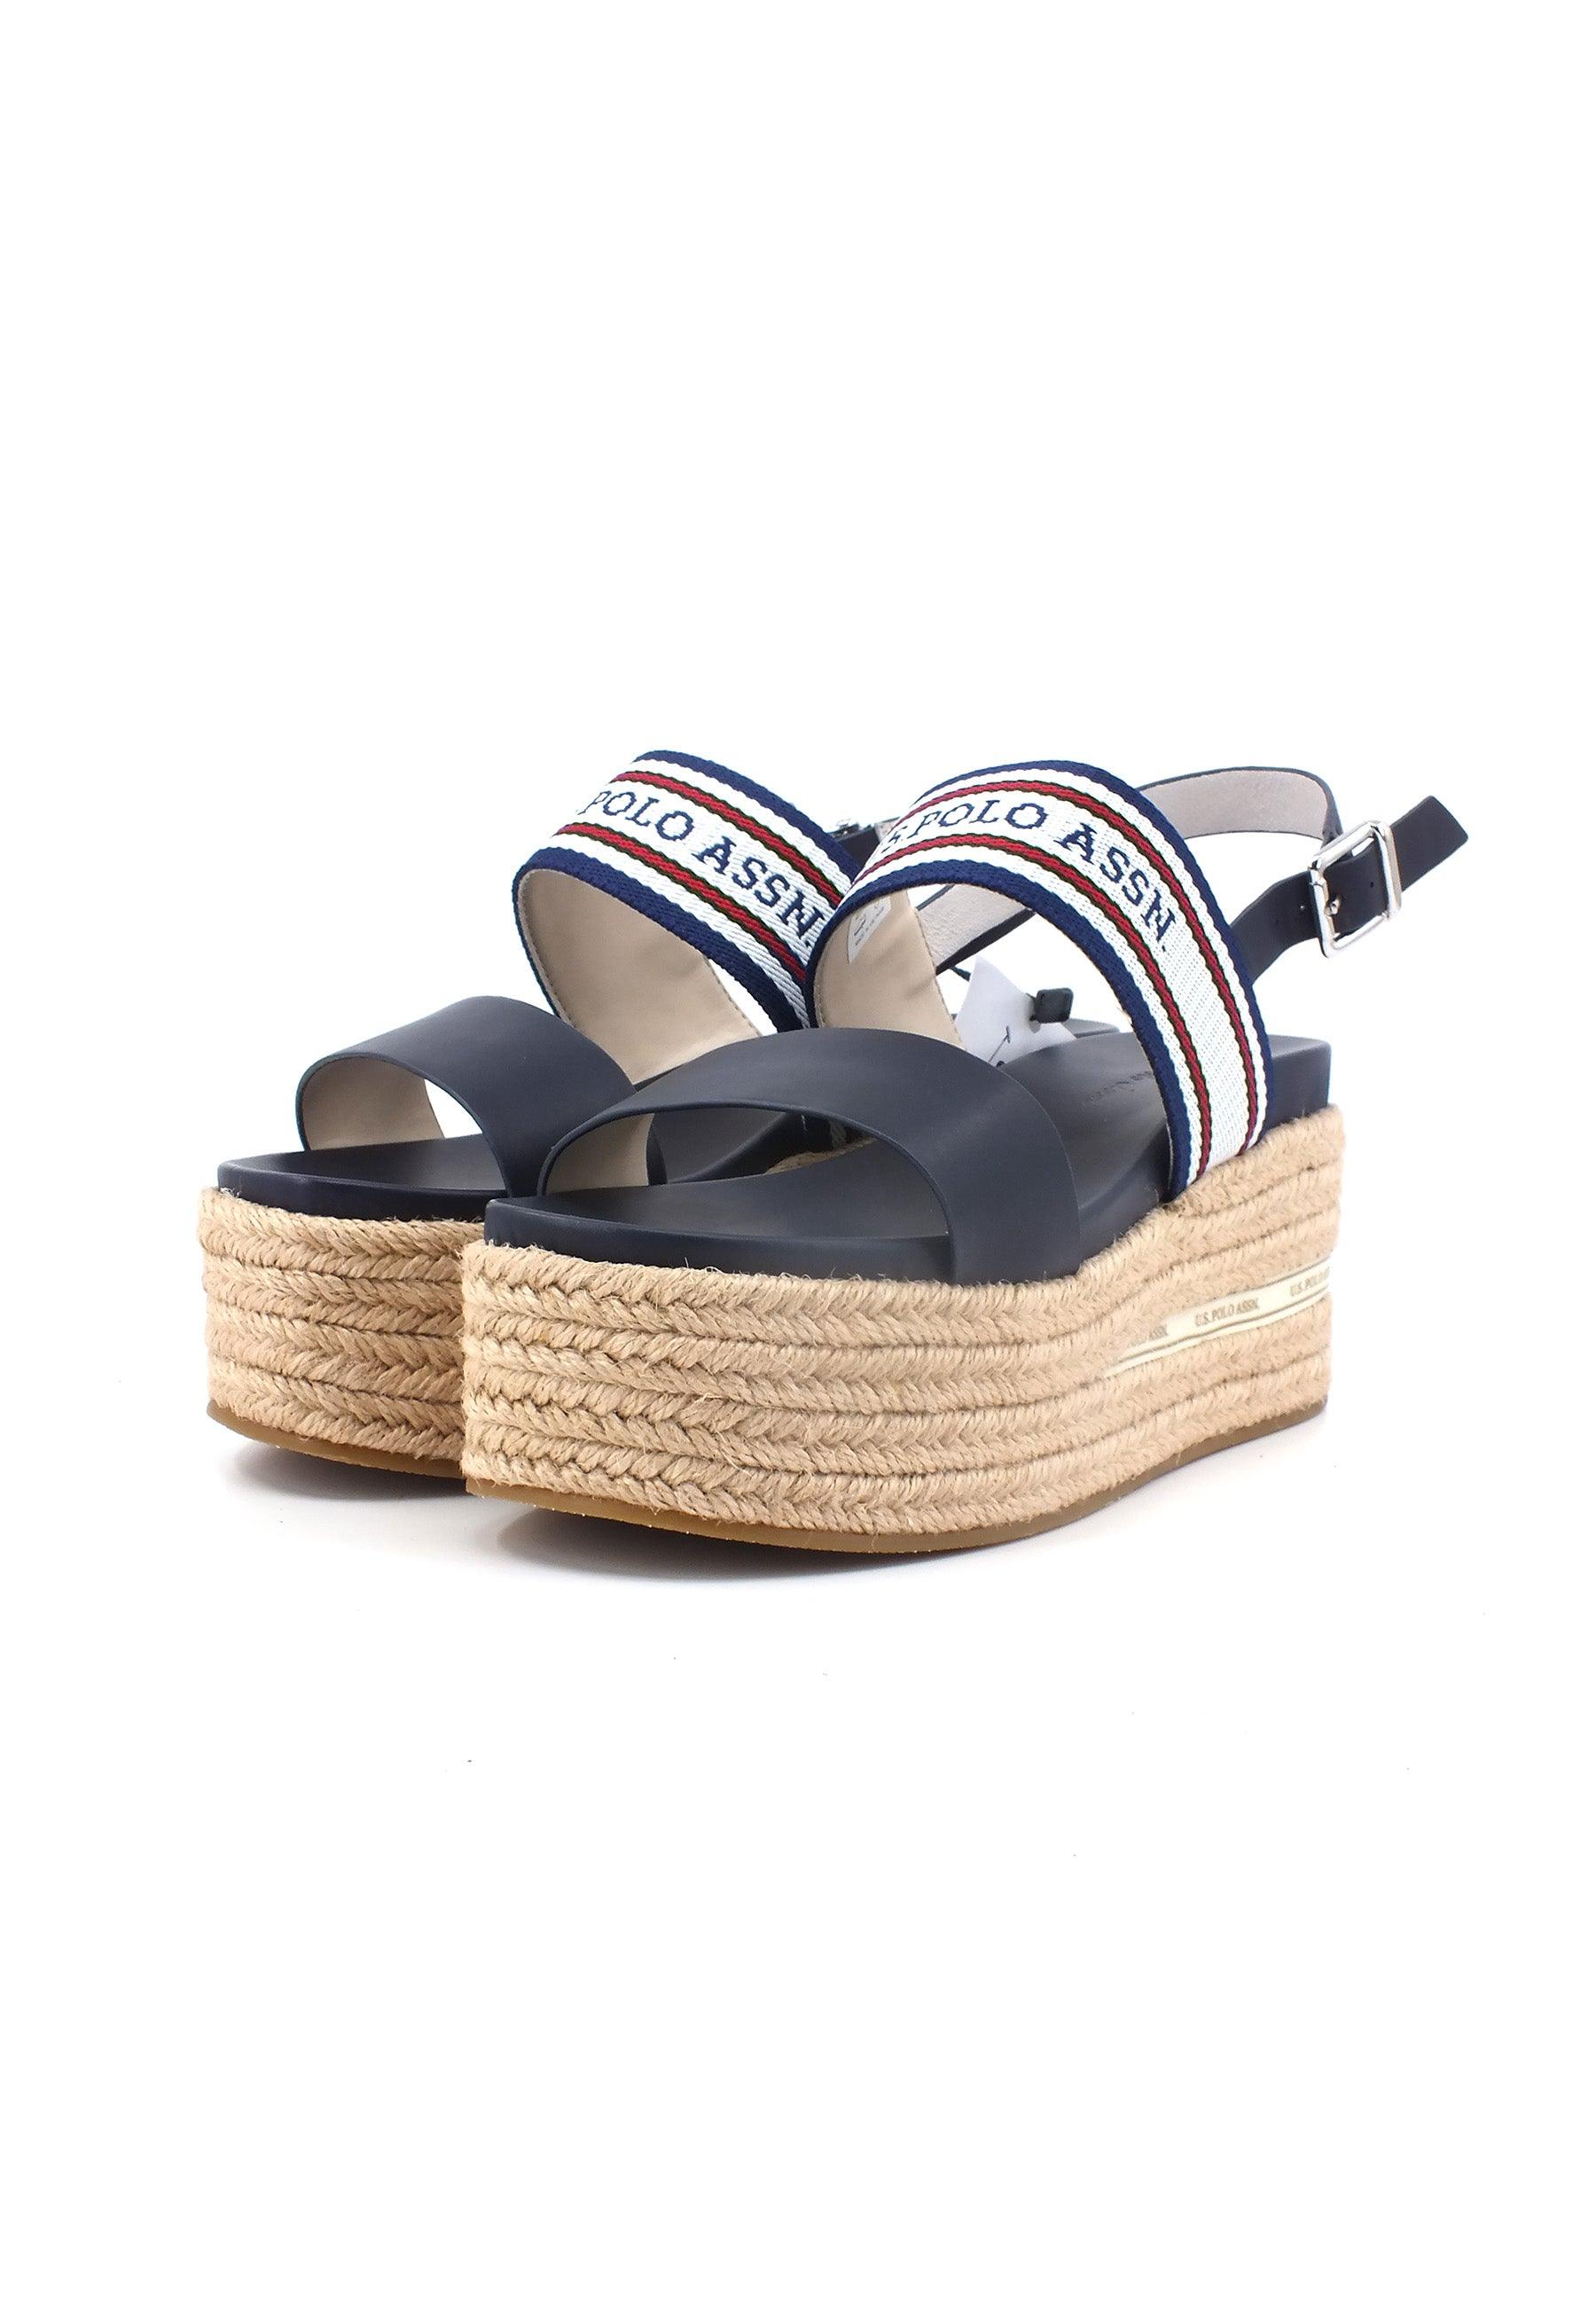 U.S. POLO ASSN: Sandalo Zeppa Donna Blue LOREN006 - Sandrini Calzature e Abbigliamento